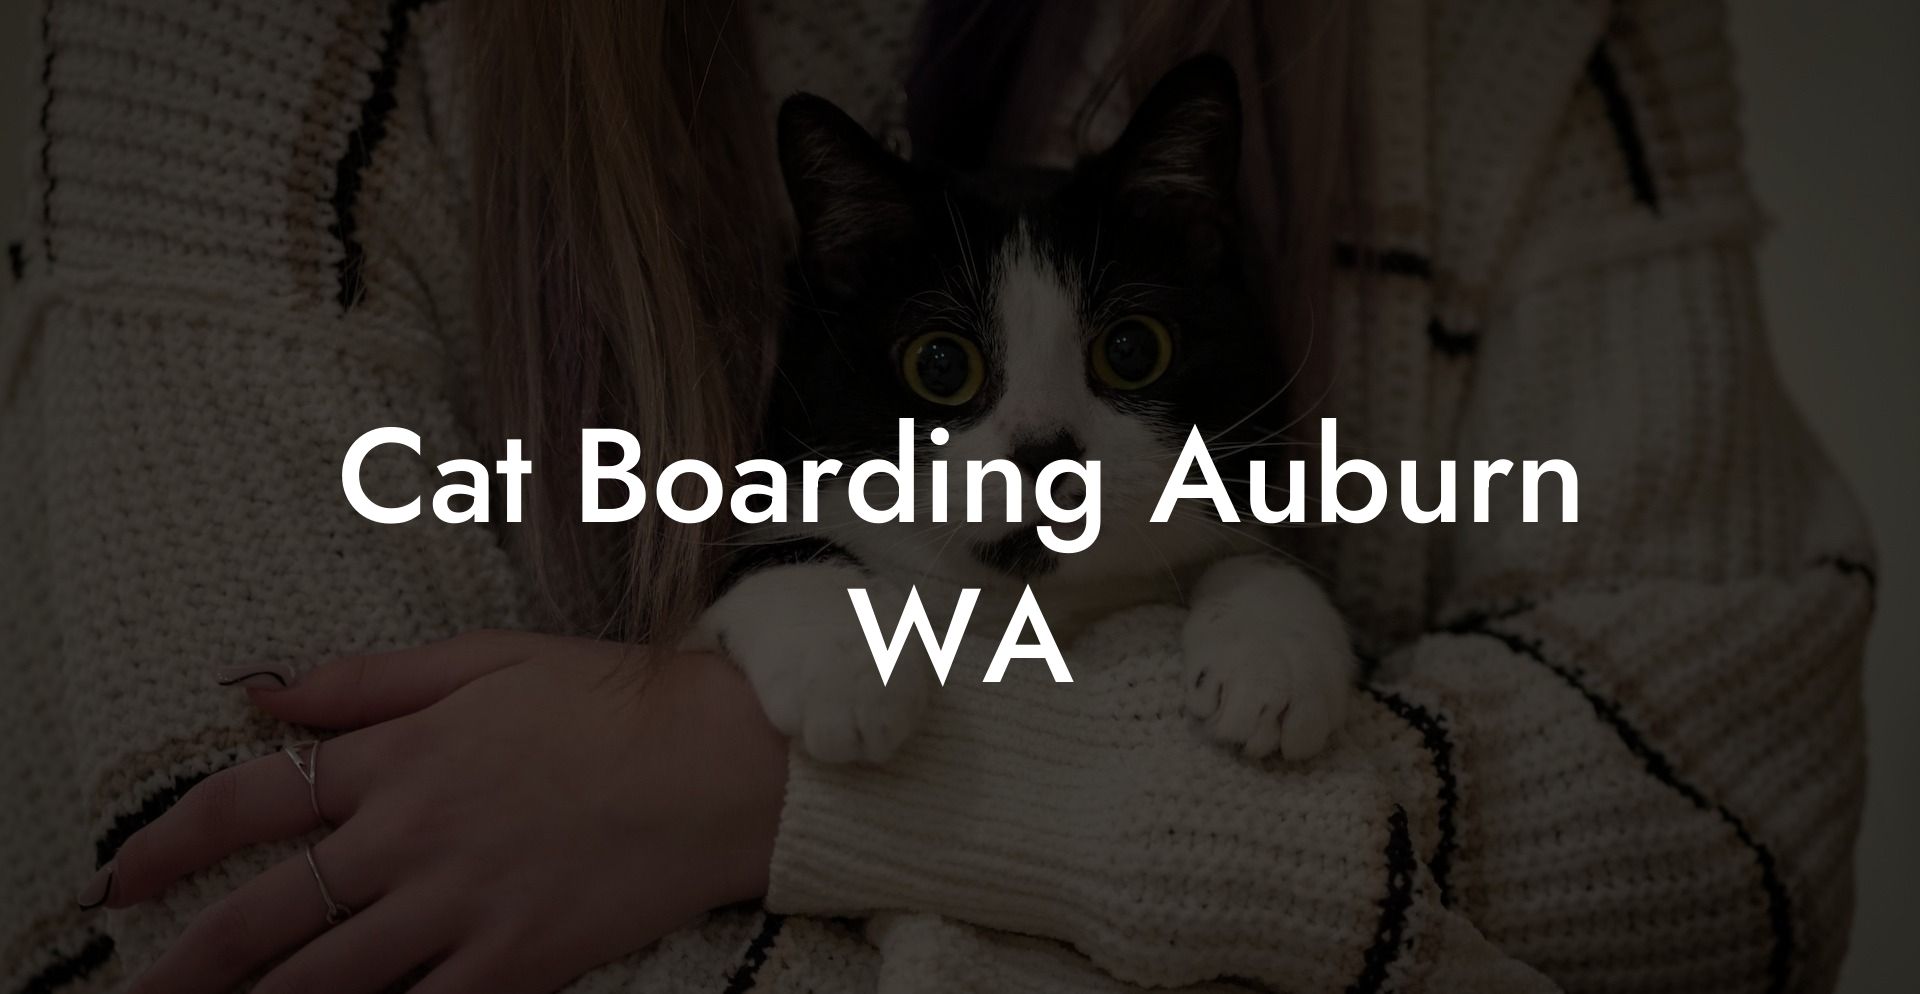 Cat Boarding Auburn WA